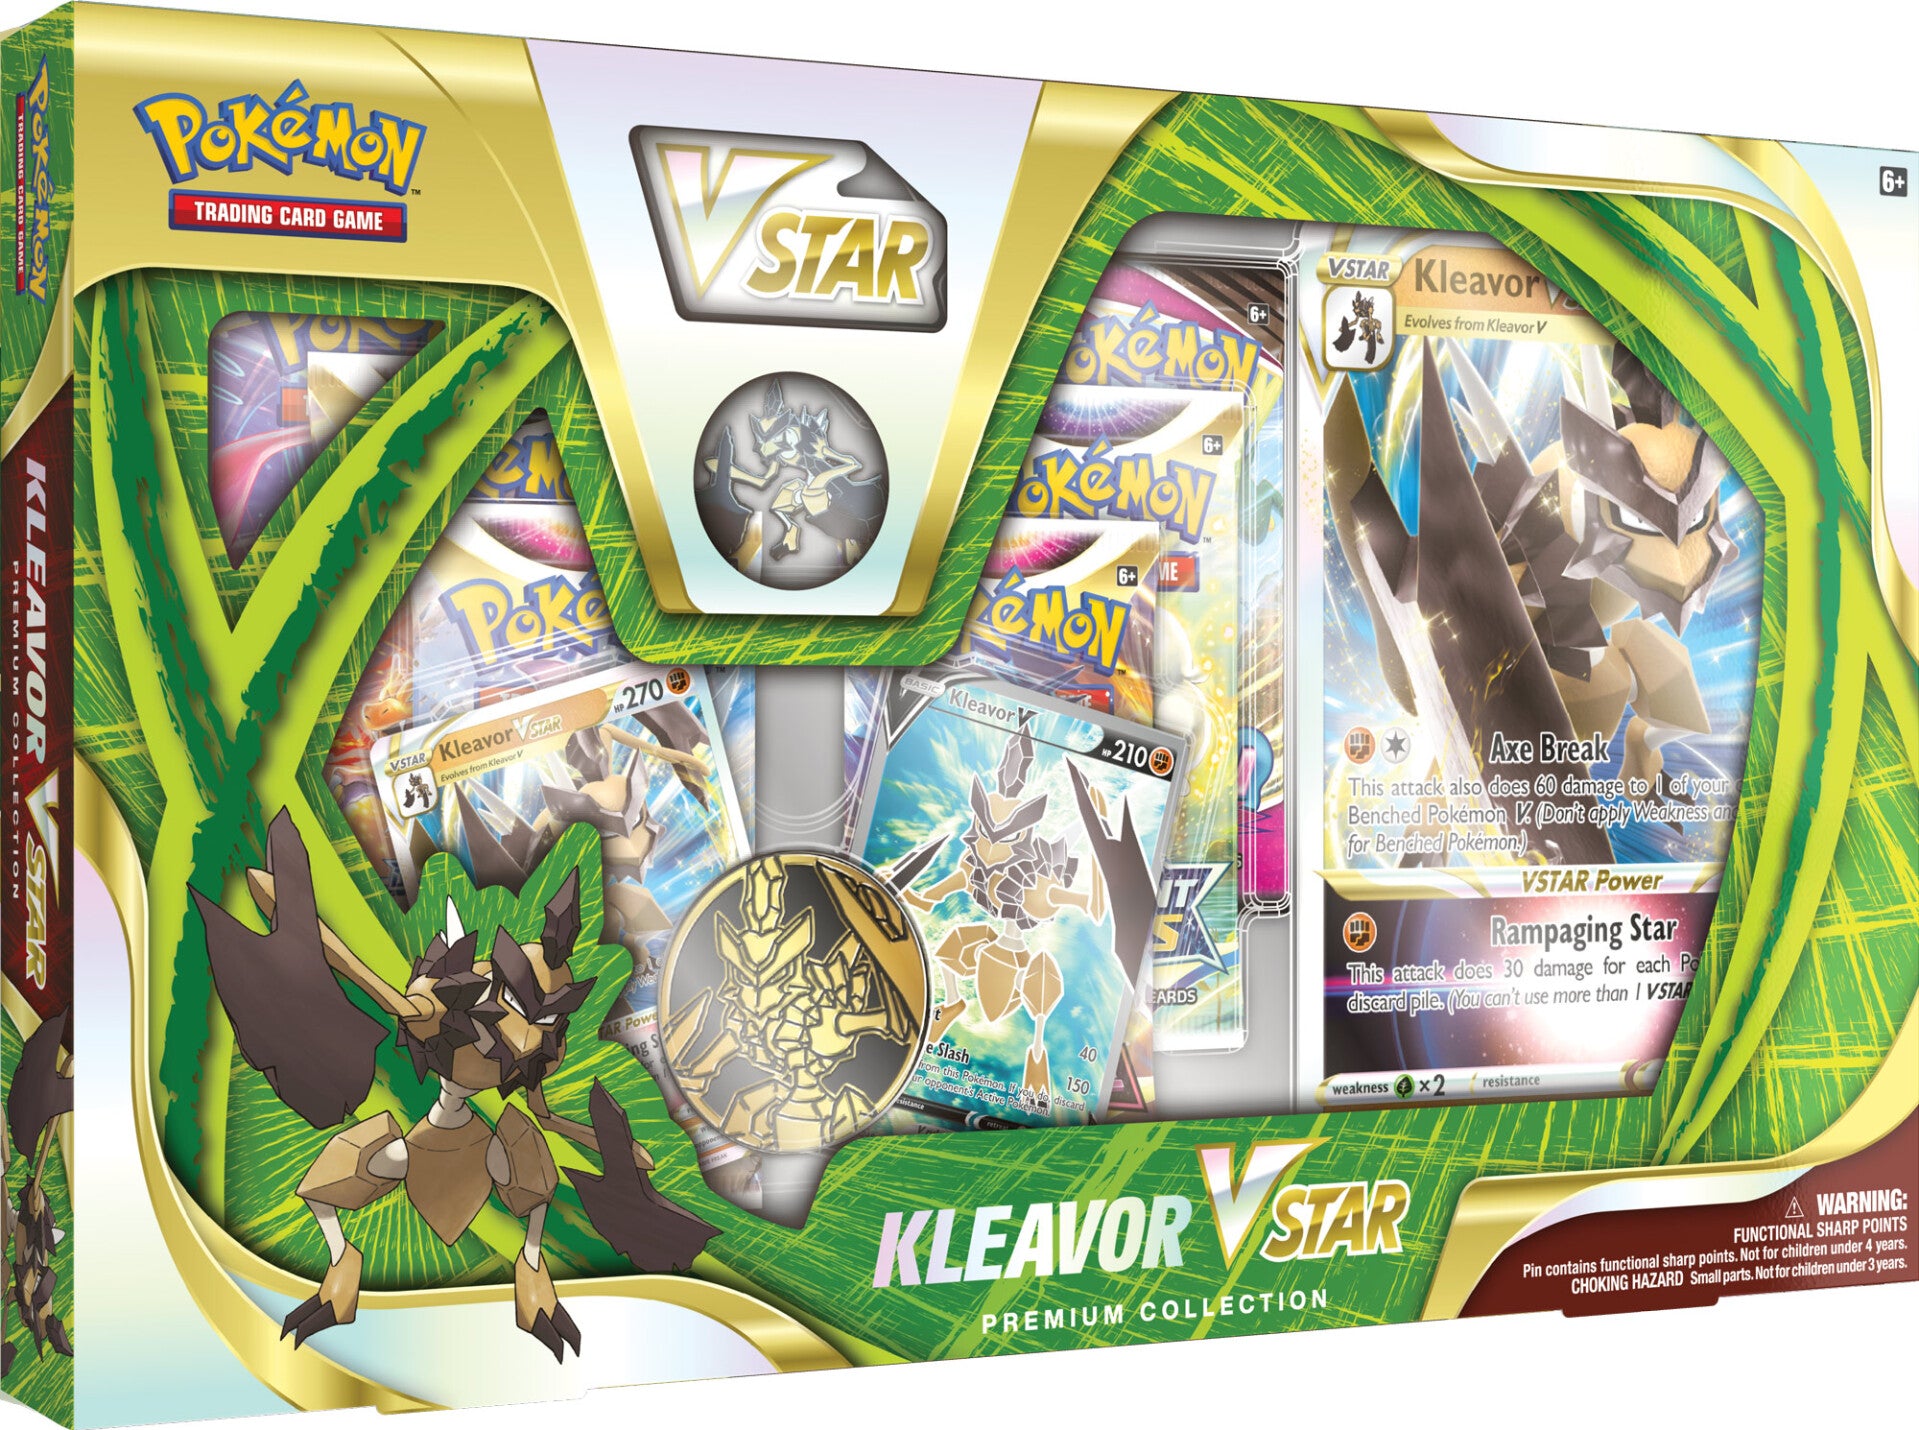 Pokémon Kleavor VSTAR Premium Collection